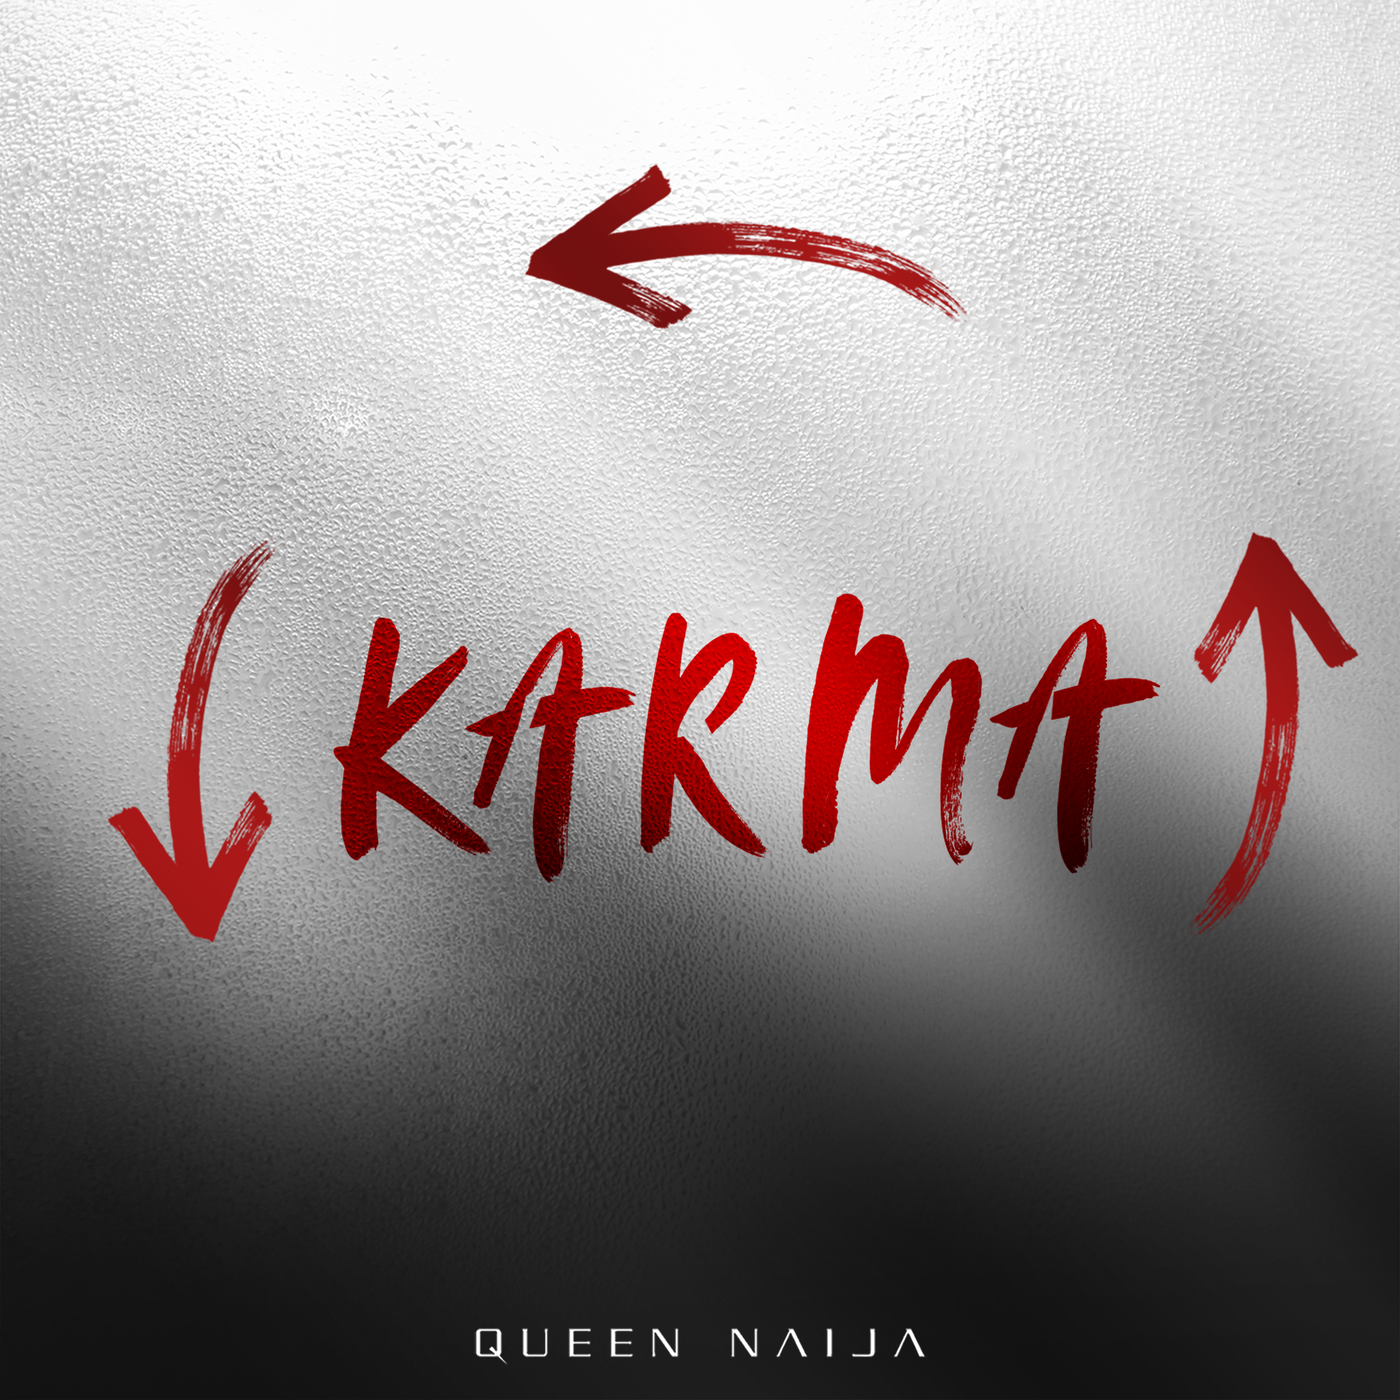 डाउनलोड करा Queen Naija - Karma